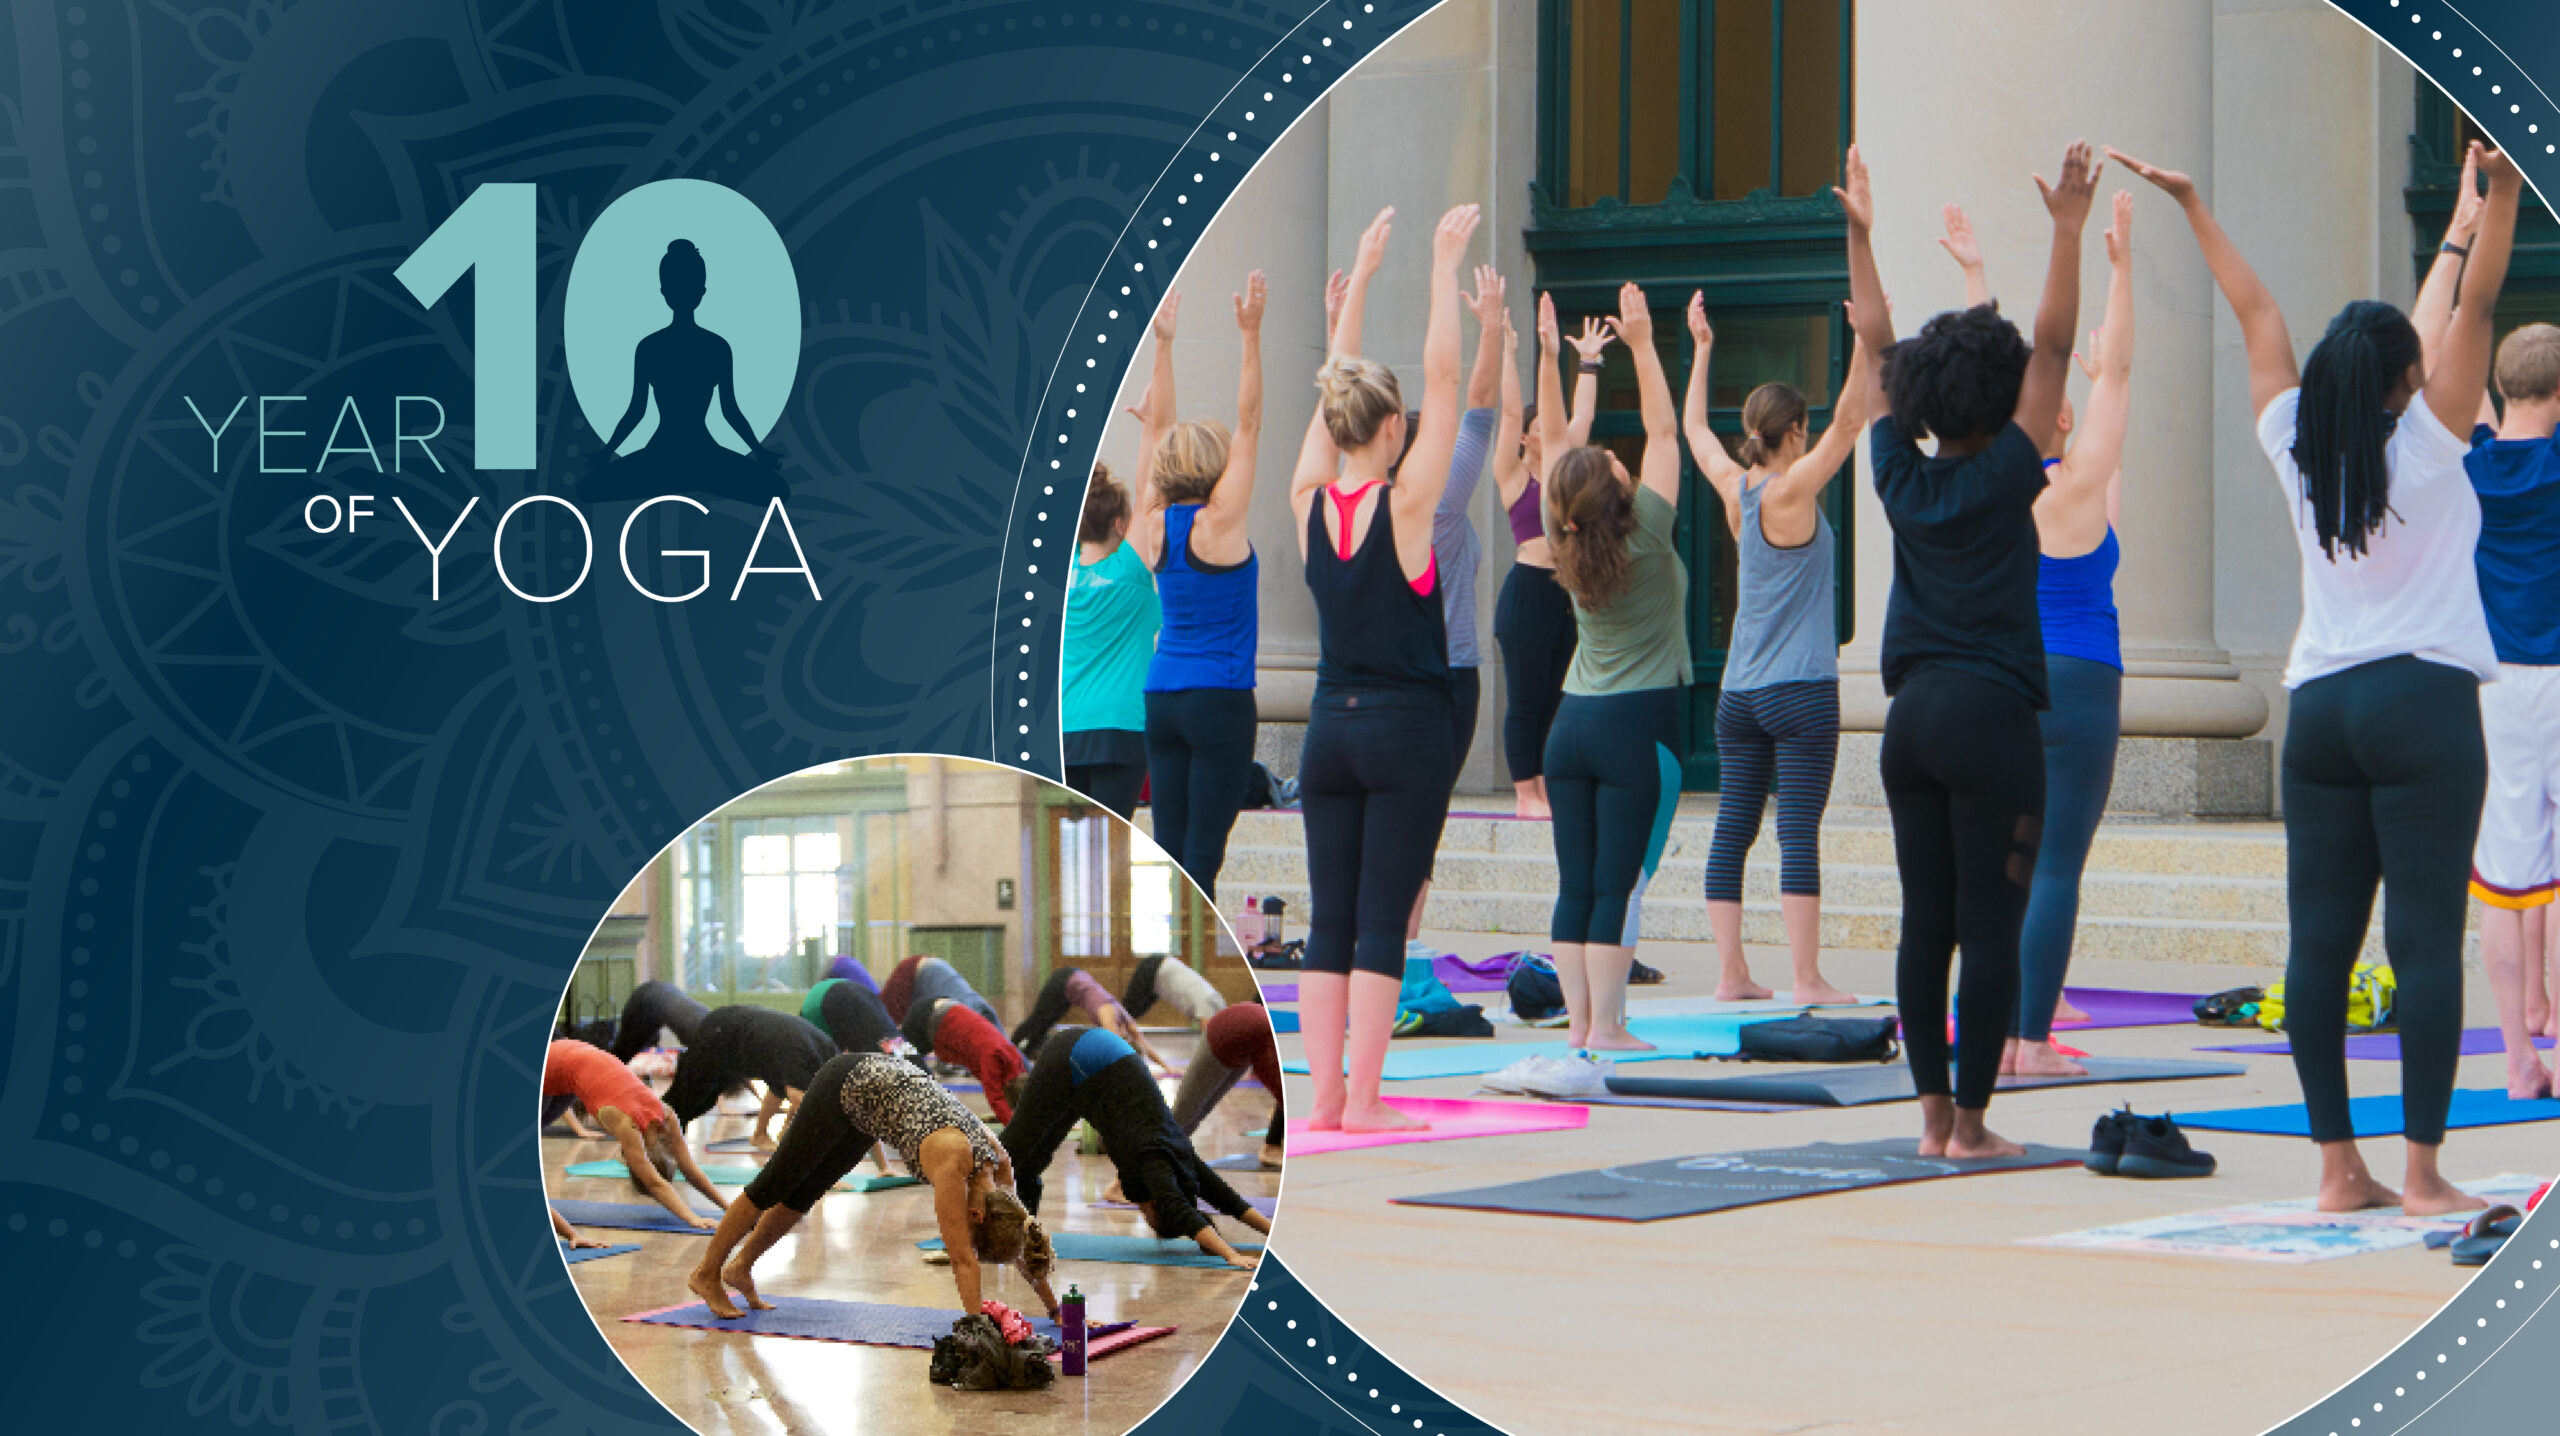 People doing yoga at Union Depot, Year 10 of Yoga logo